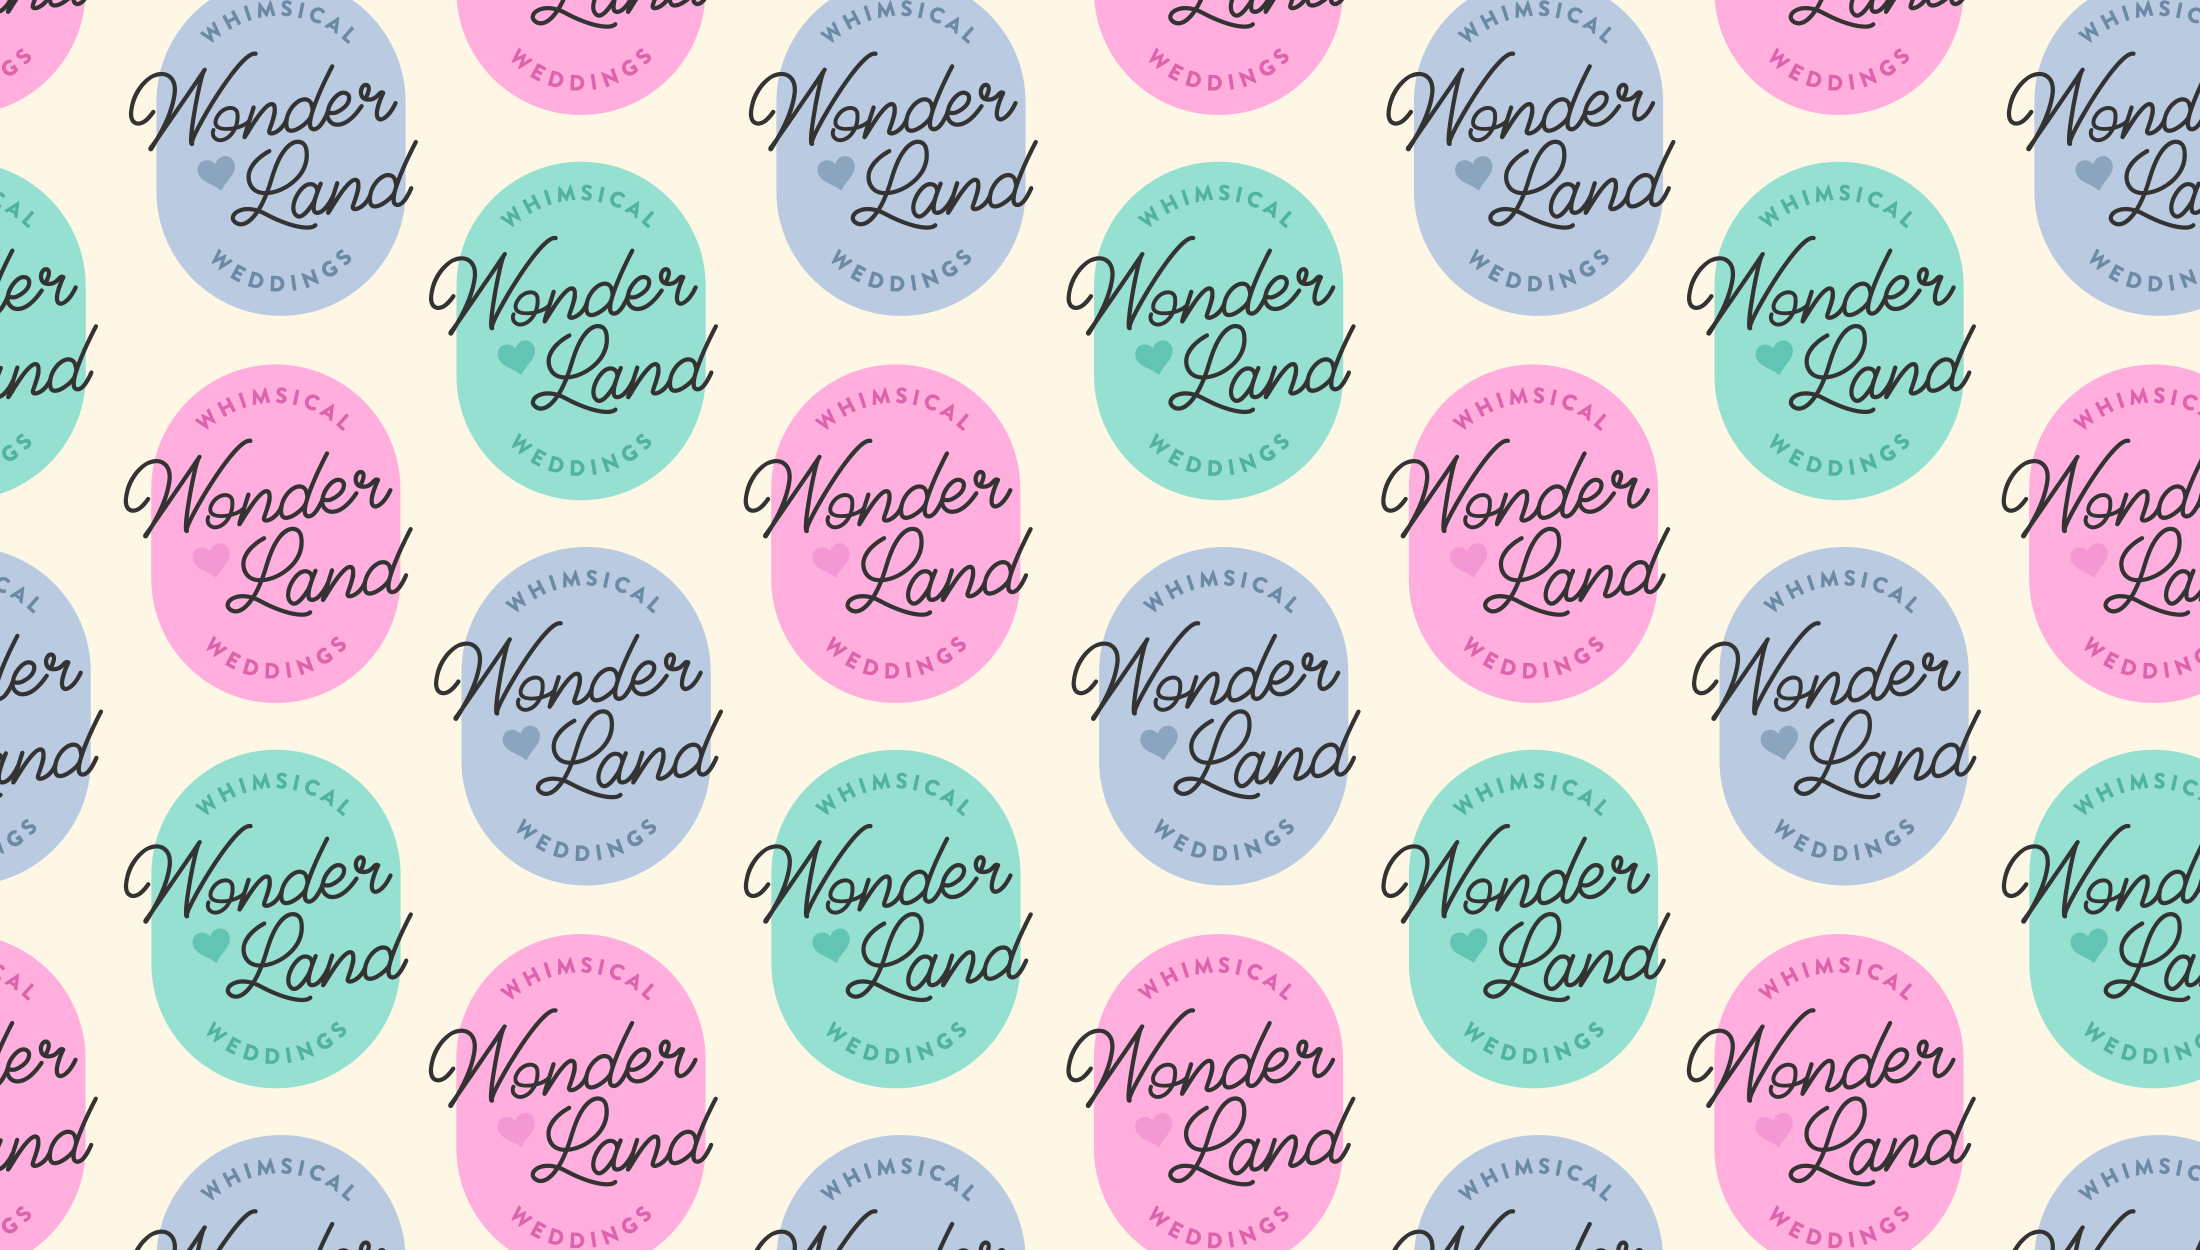 Logomark pattern for Whimsical Wonderland Weddings, UK wedding inspiration blog and supplier - designed by Wiltshire-based graphic designer, Kaye Huett